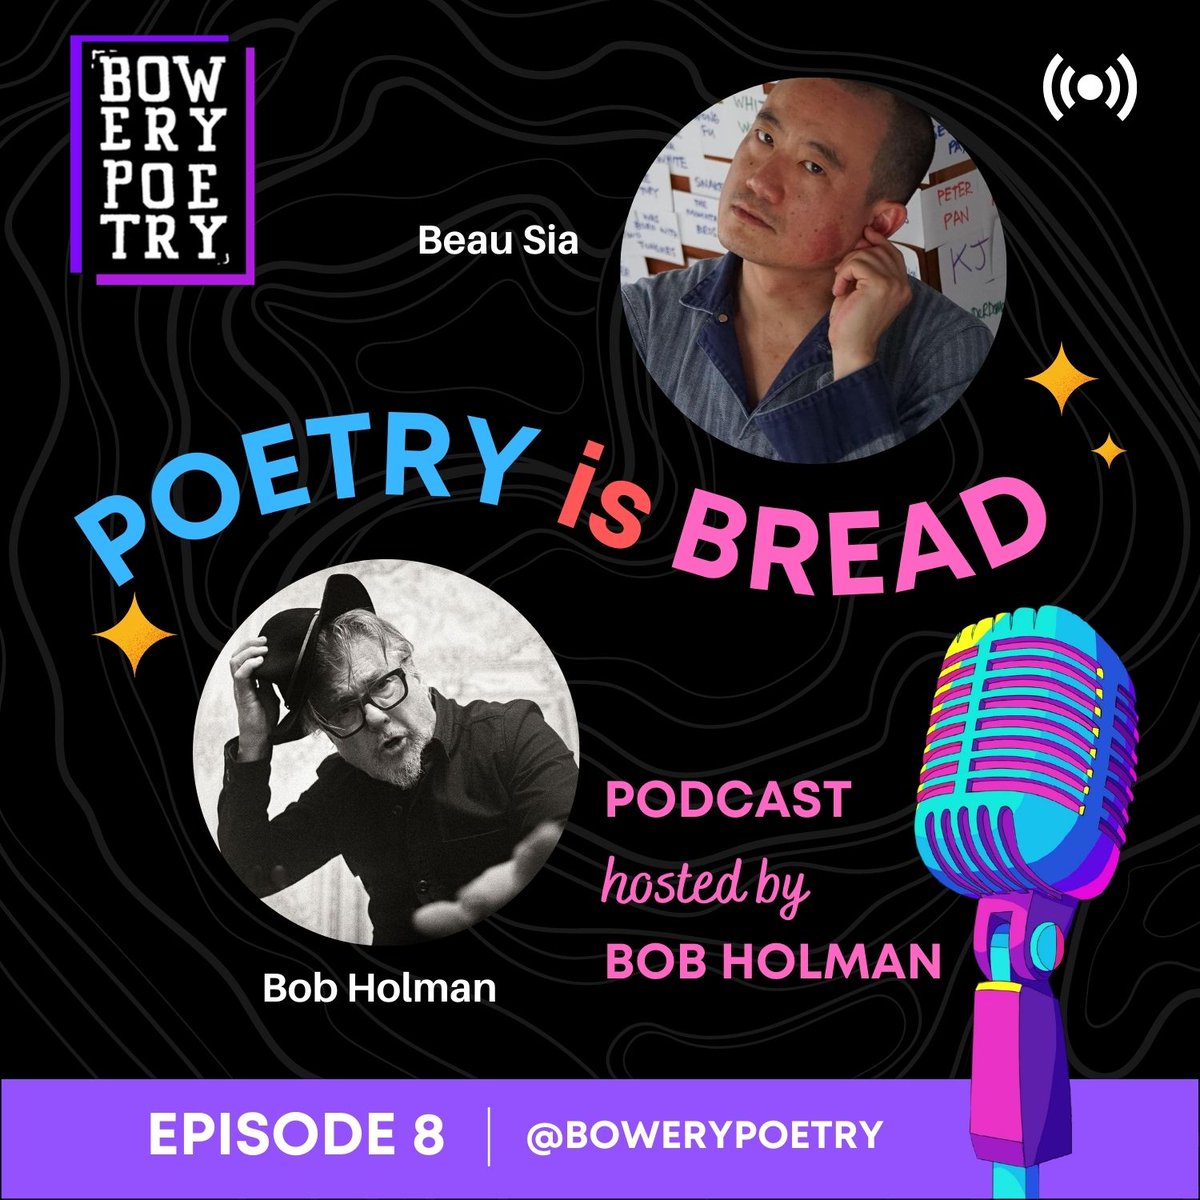 Episode 8 of “Poetry is Bread” w/ host @BobHolmanPoet and Tony Award winning poet and world-renowned performer @beausia on poetry slams to theater & film. Listen: bowerypoetry.podbean.com @GlobalTiesUS @ECAatState @CultureAtState @exchangealumni @StateDept...